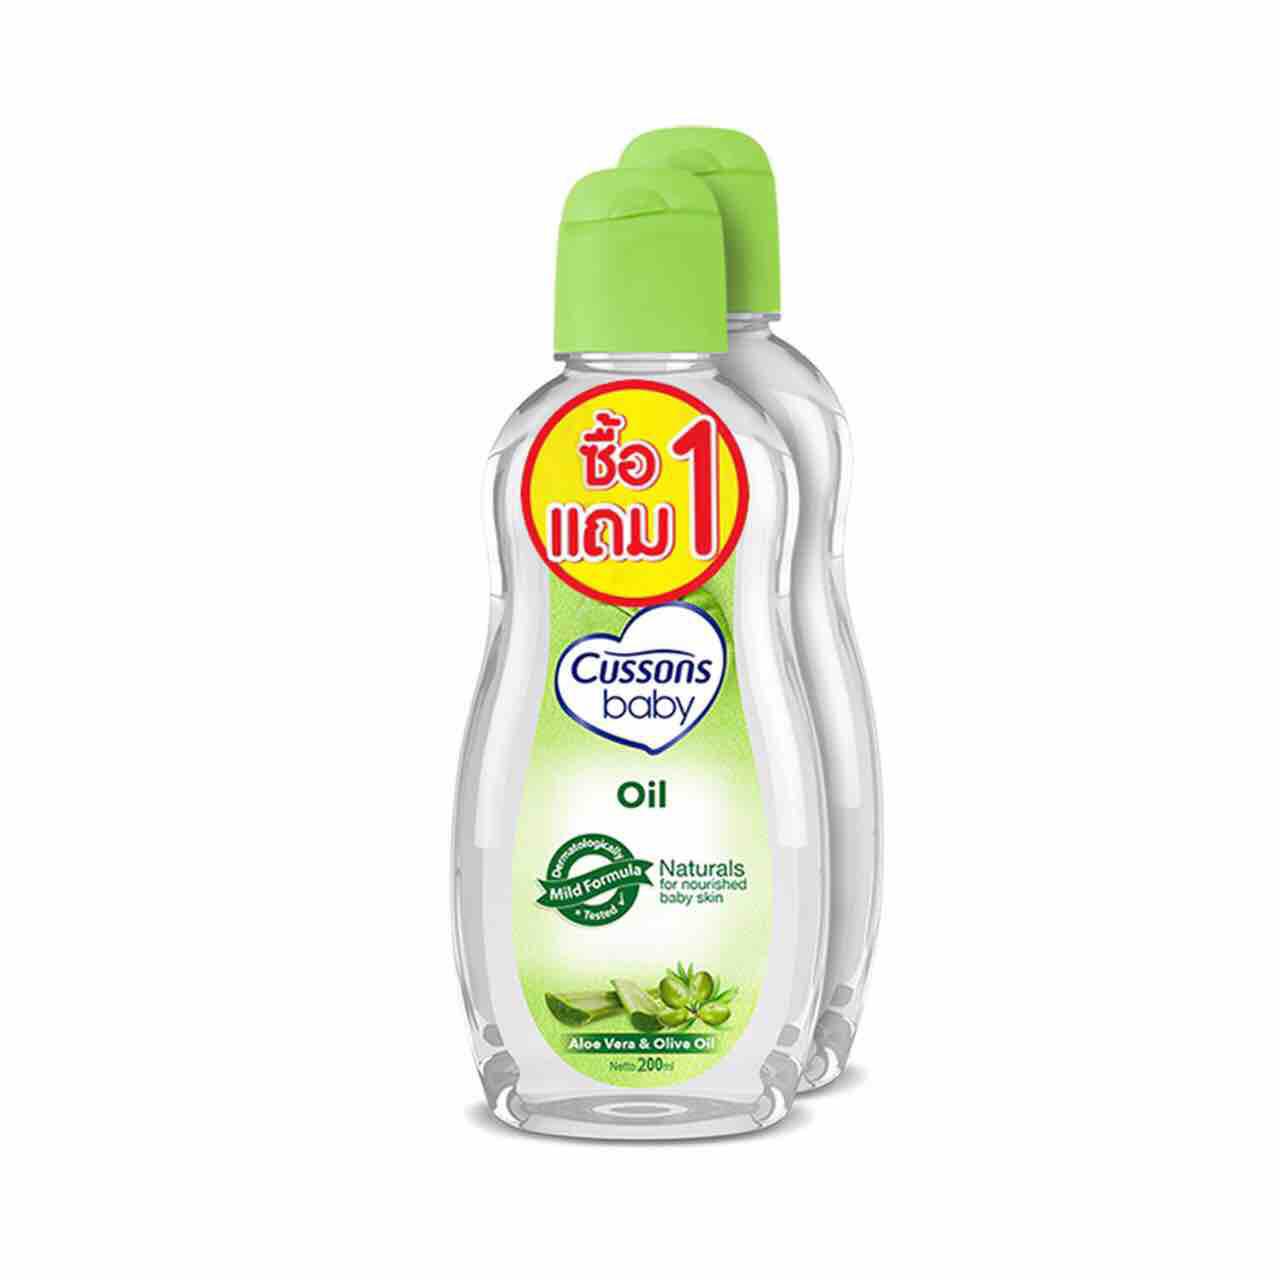 CUSSONS ออยล์บำรุงผิว Baby Oil Naturals สีเขียว ปริมาณ 200 มล. (ซื้อ 1 แถม 1) 1 แพ๊ค